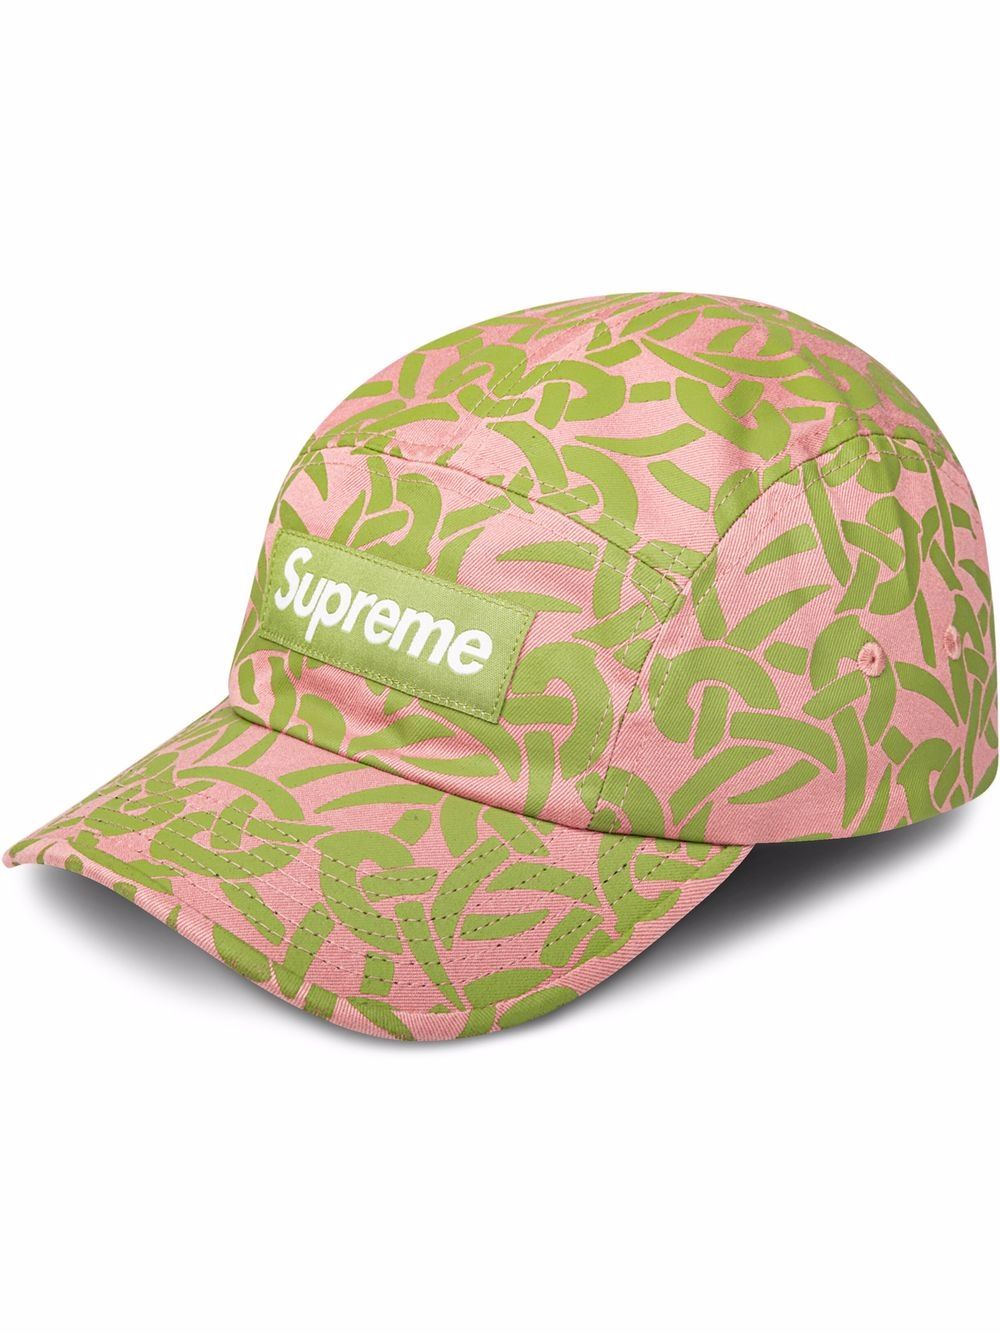 Supreme Celtic knot camp cap - Pink von Supreme